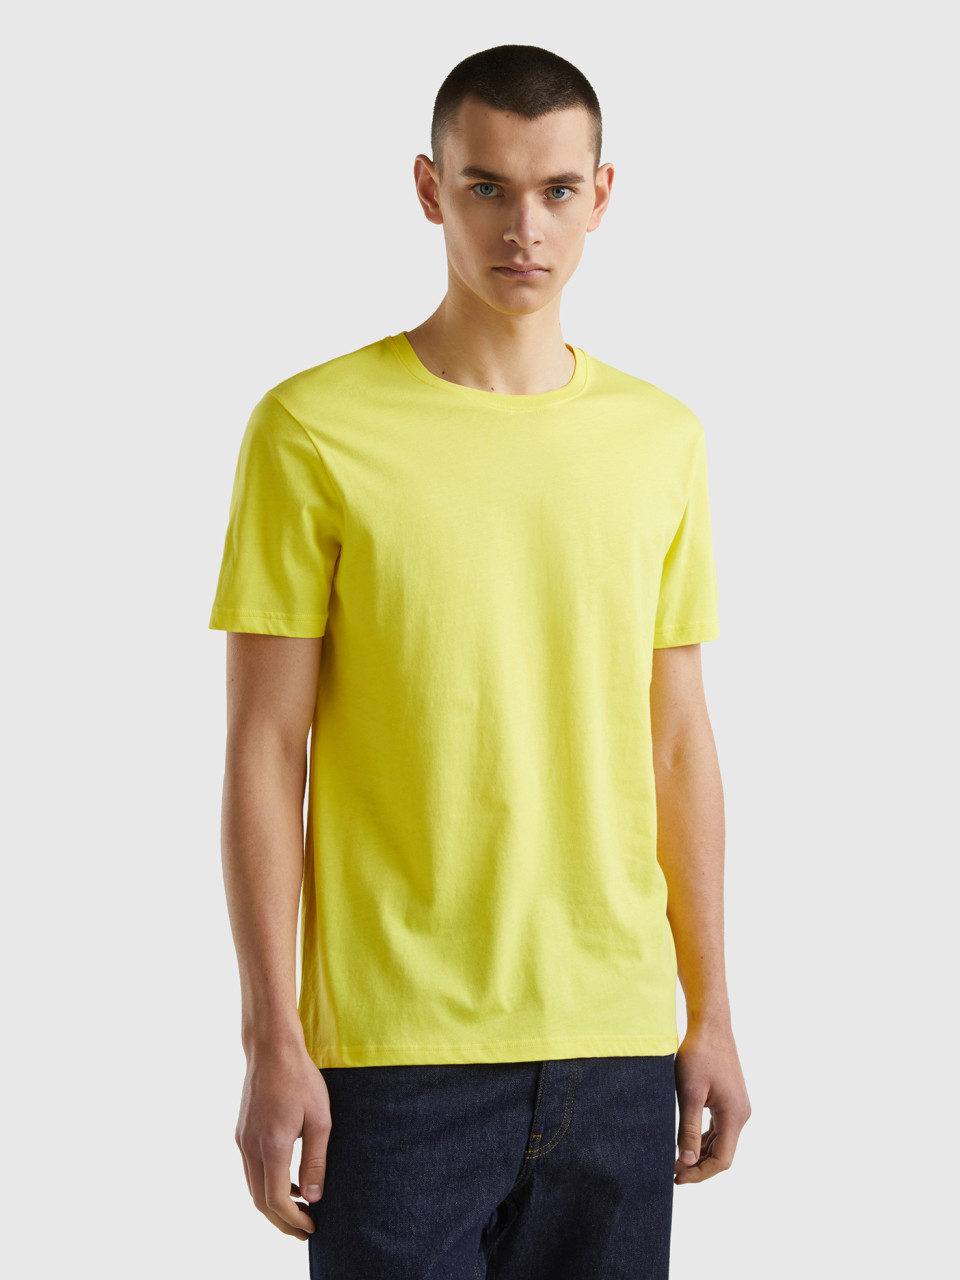 Benetton, Camiseta Amarilla, Amarillo, Hombre